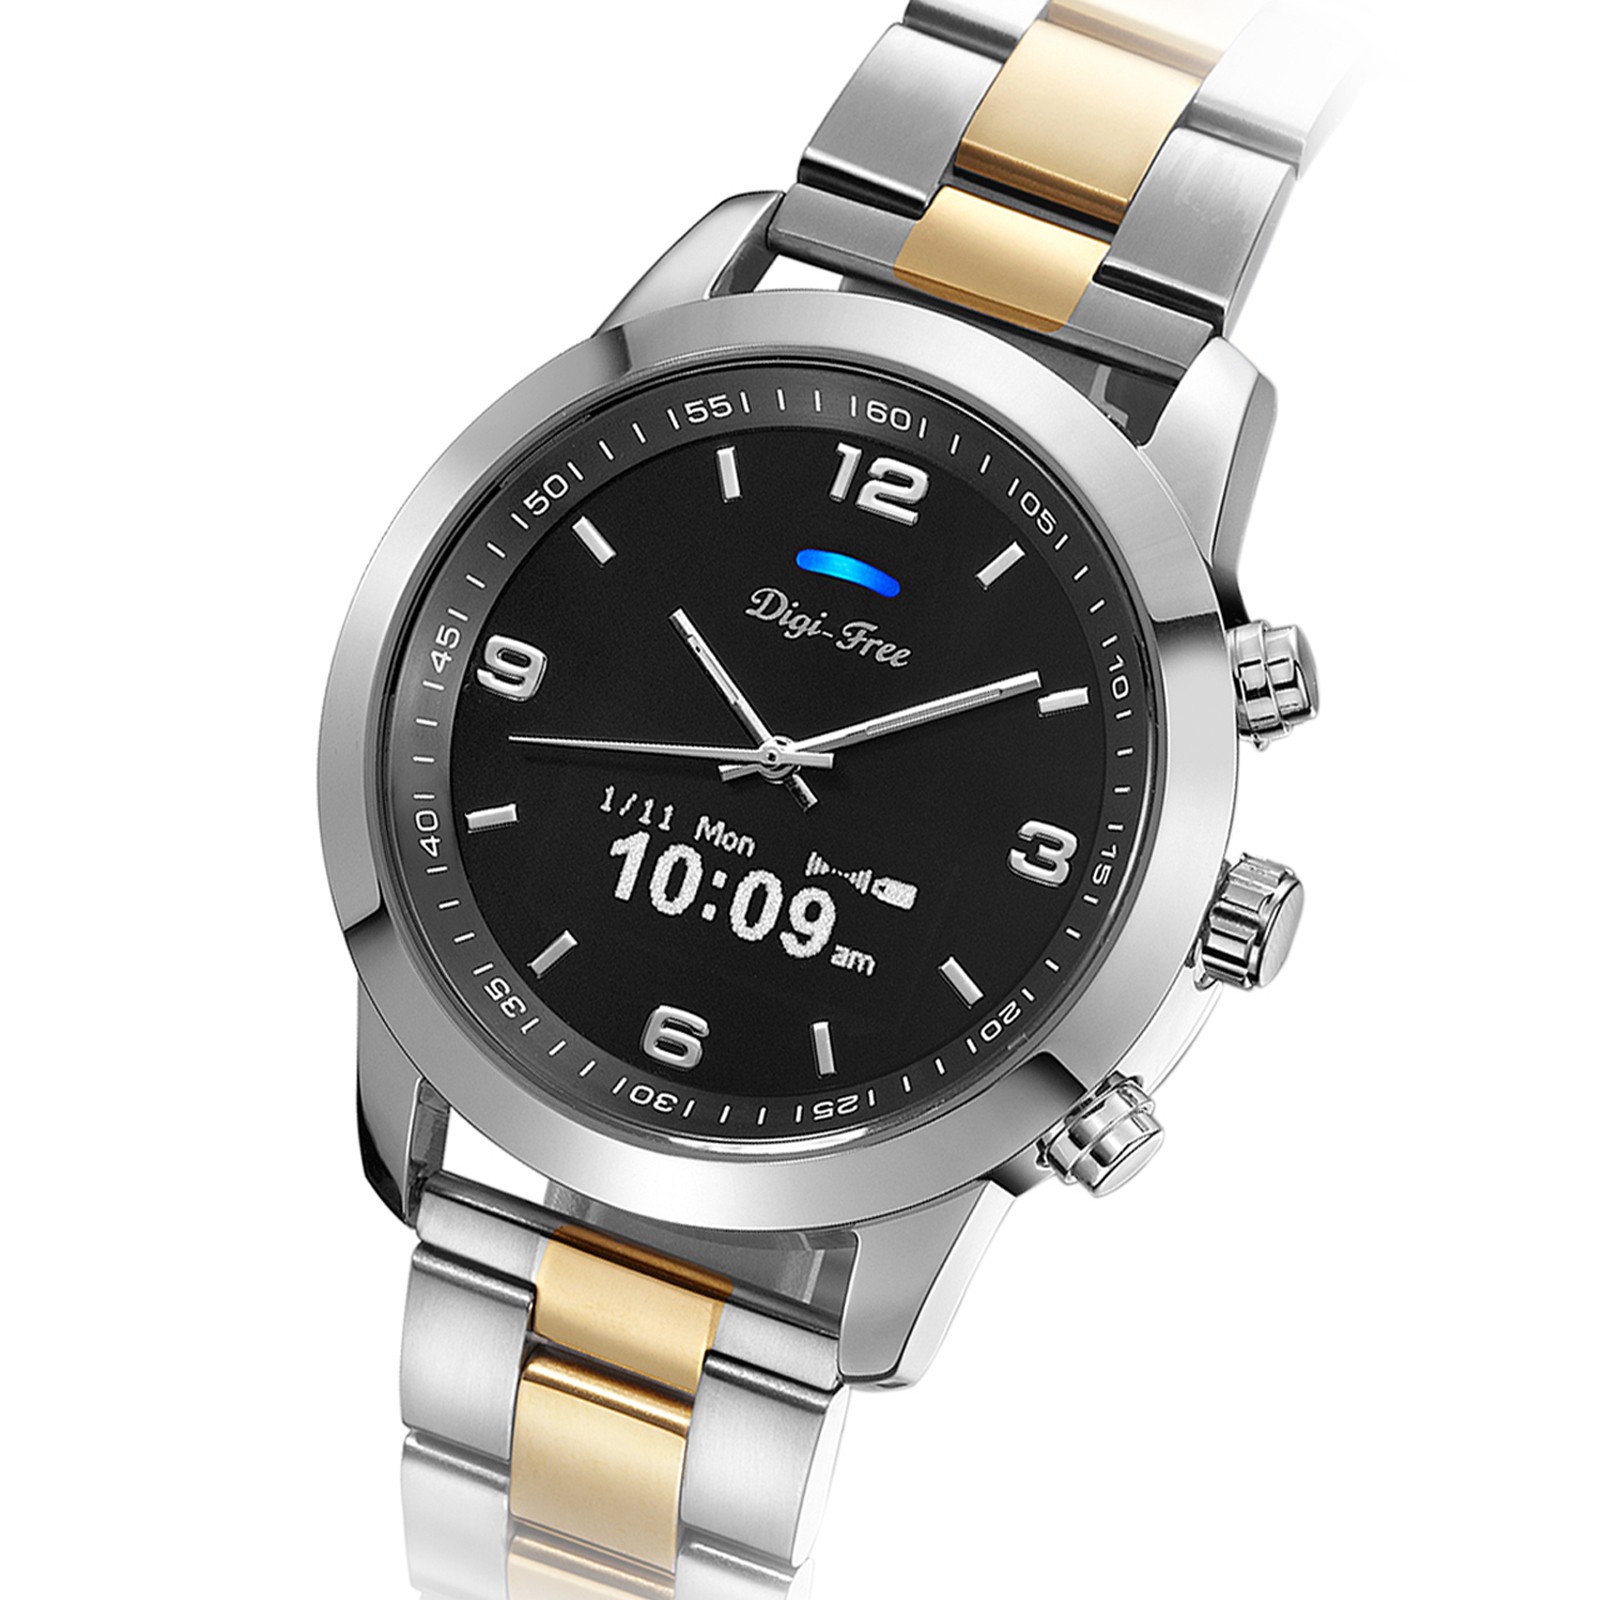 SIFIR DİGİ-FREE bluetooth Analog klasik lcd Akıllı Saat Smart Watch Safir Cam 179 TL